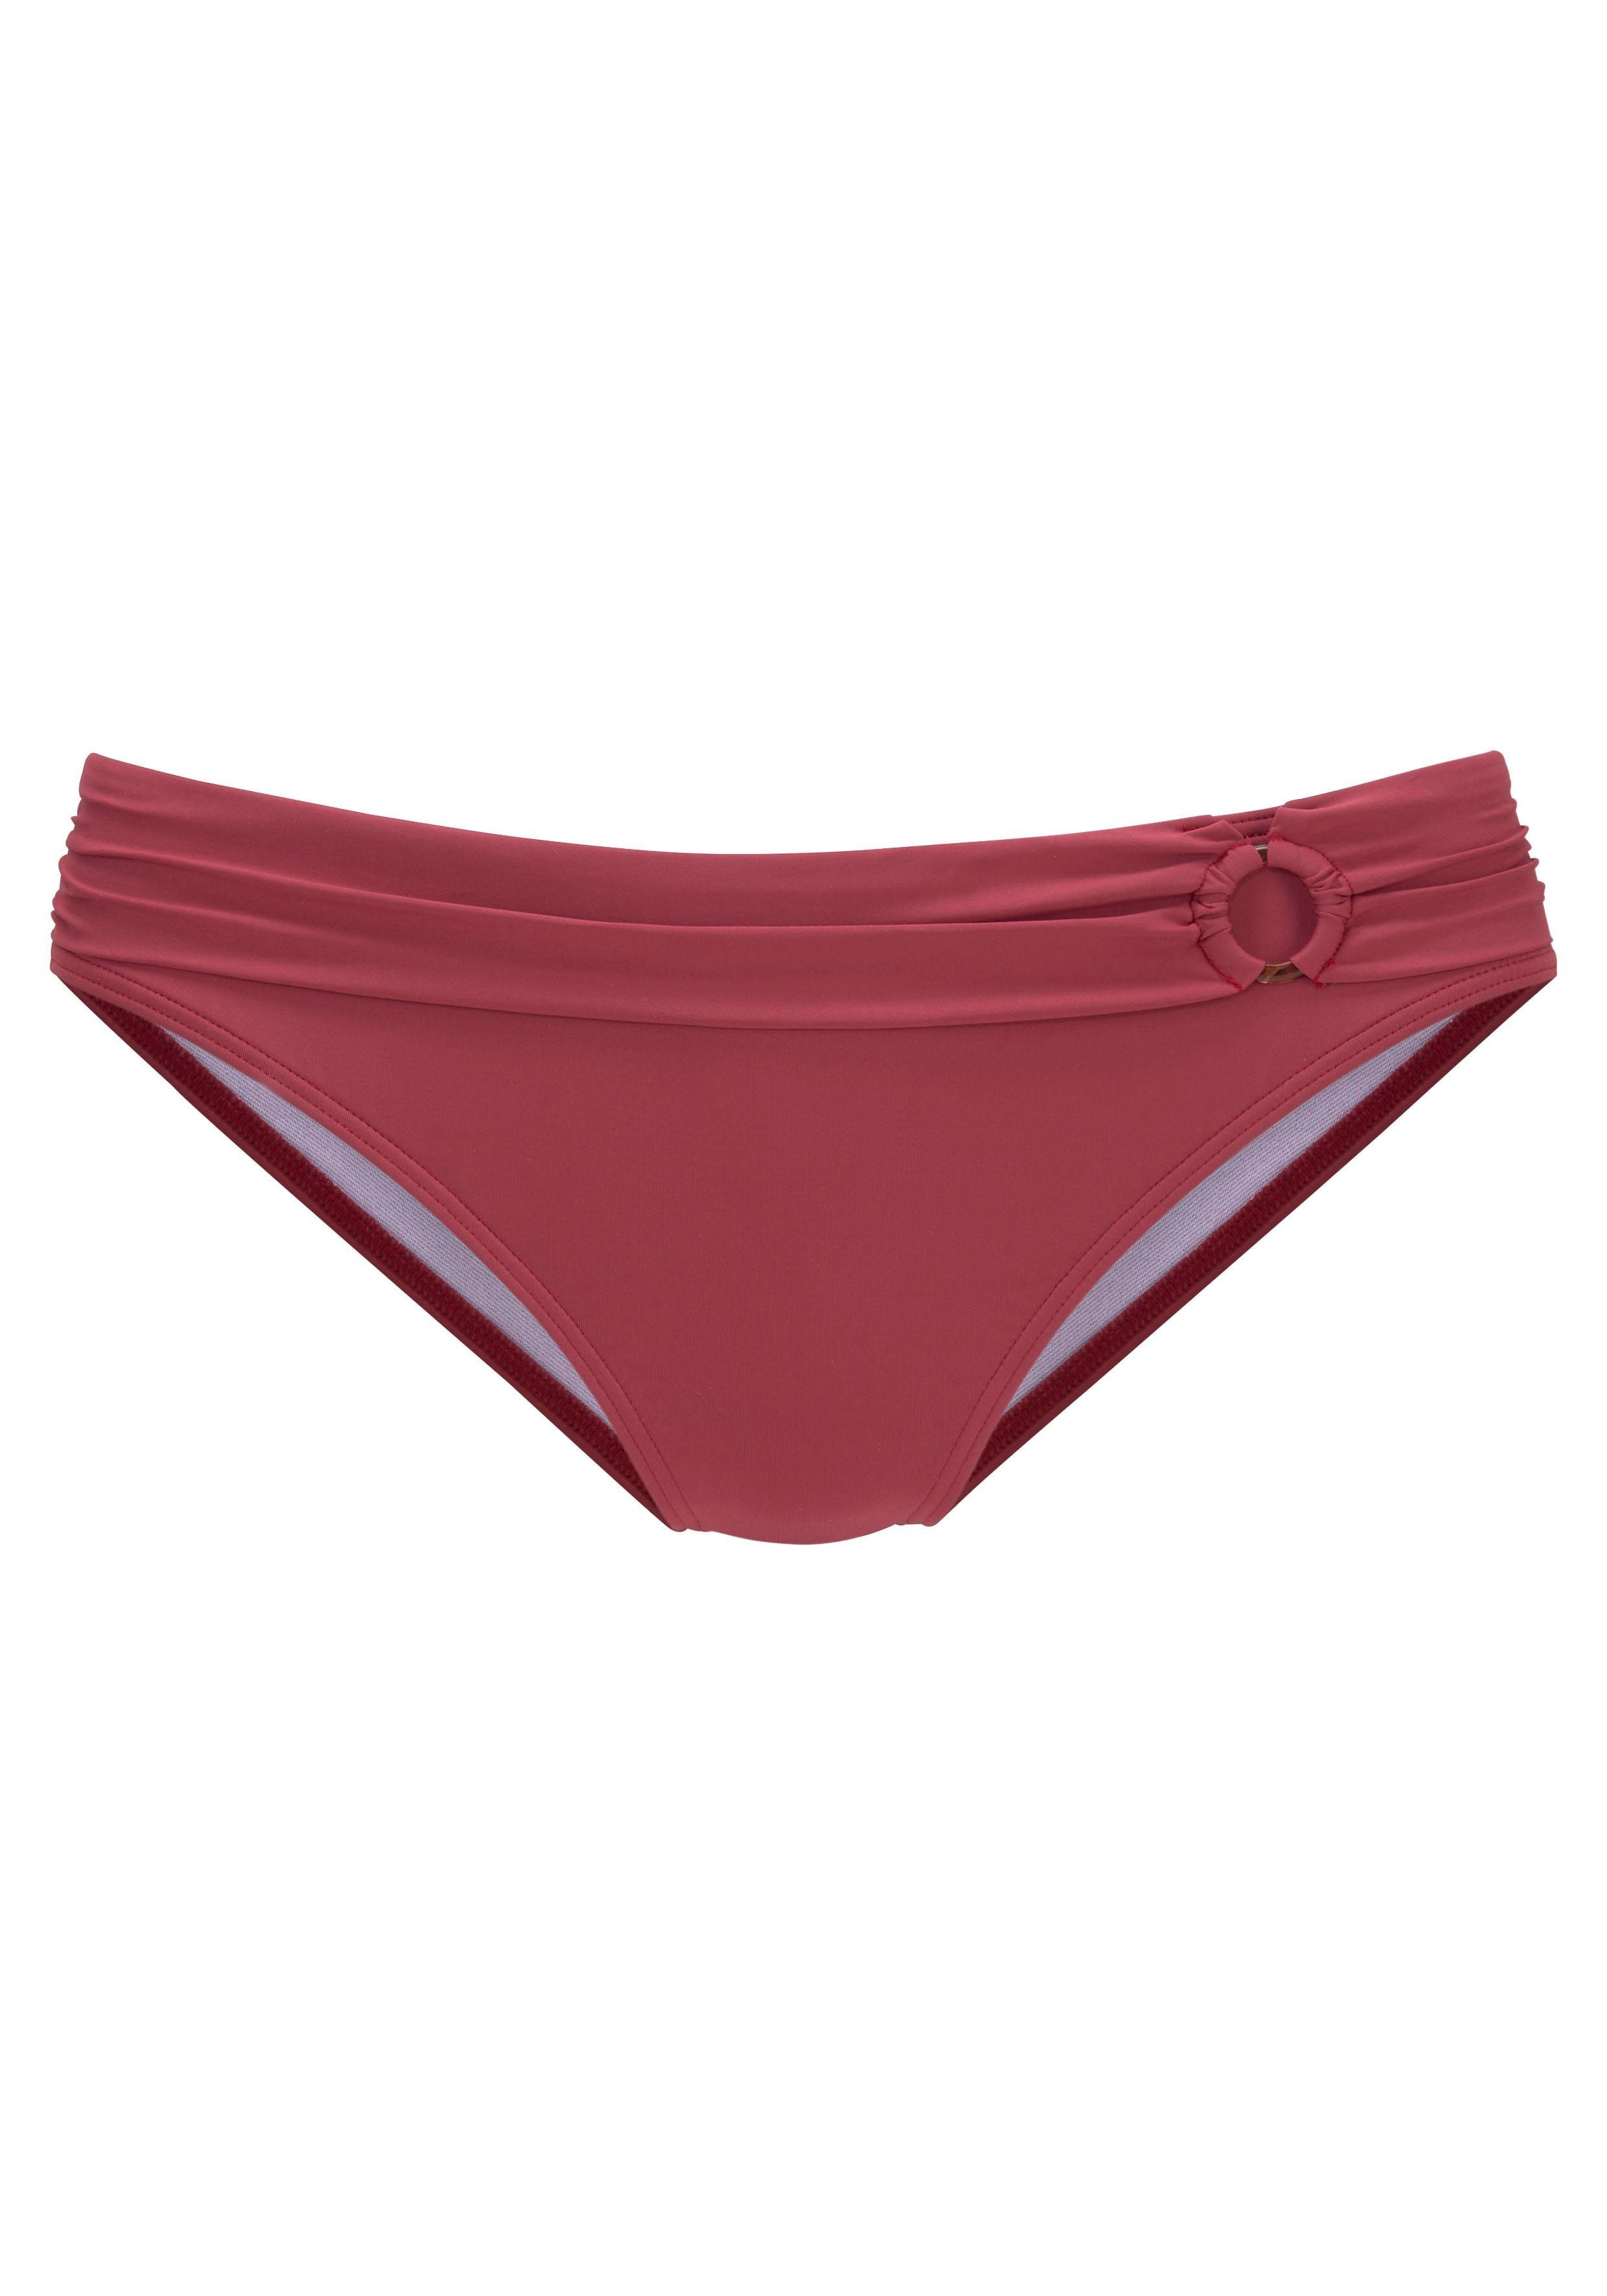 s.oliver red label beachwear bikinibroekje rome met omslagband rood